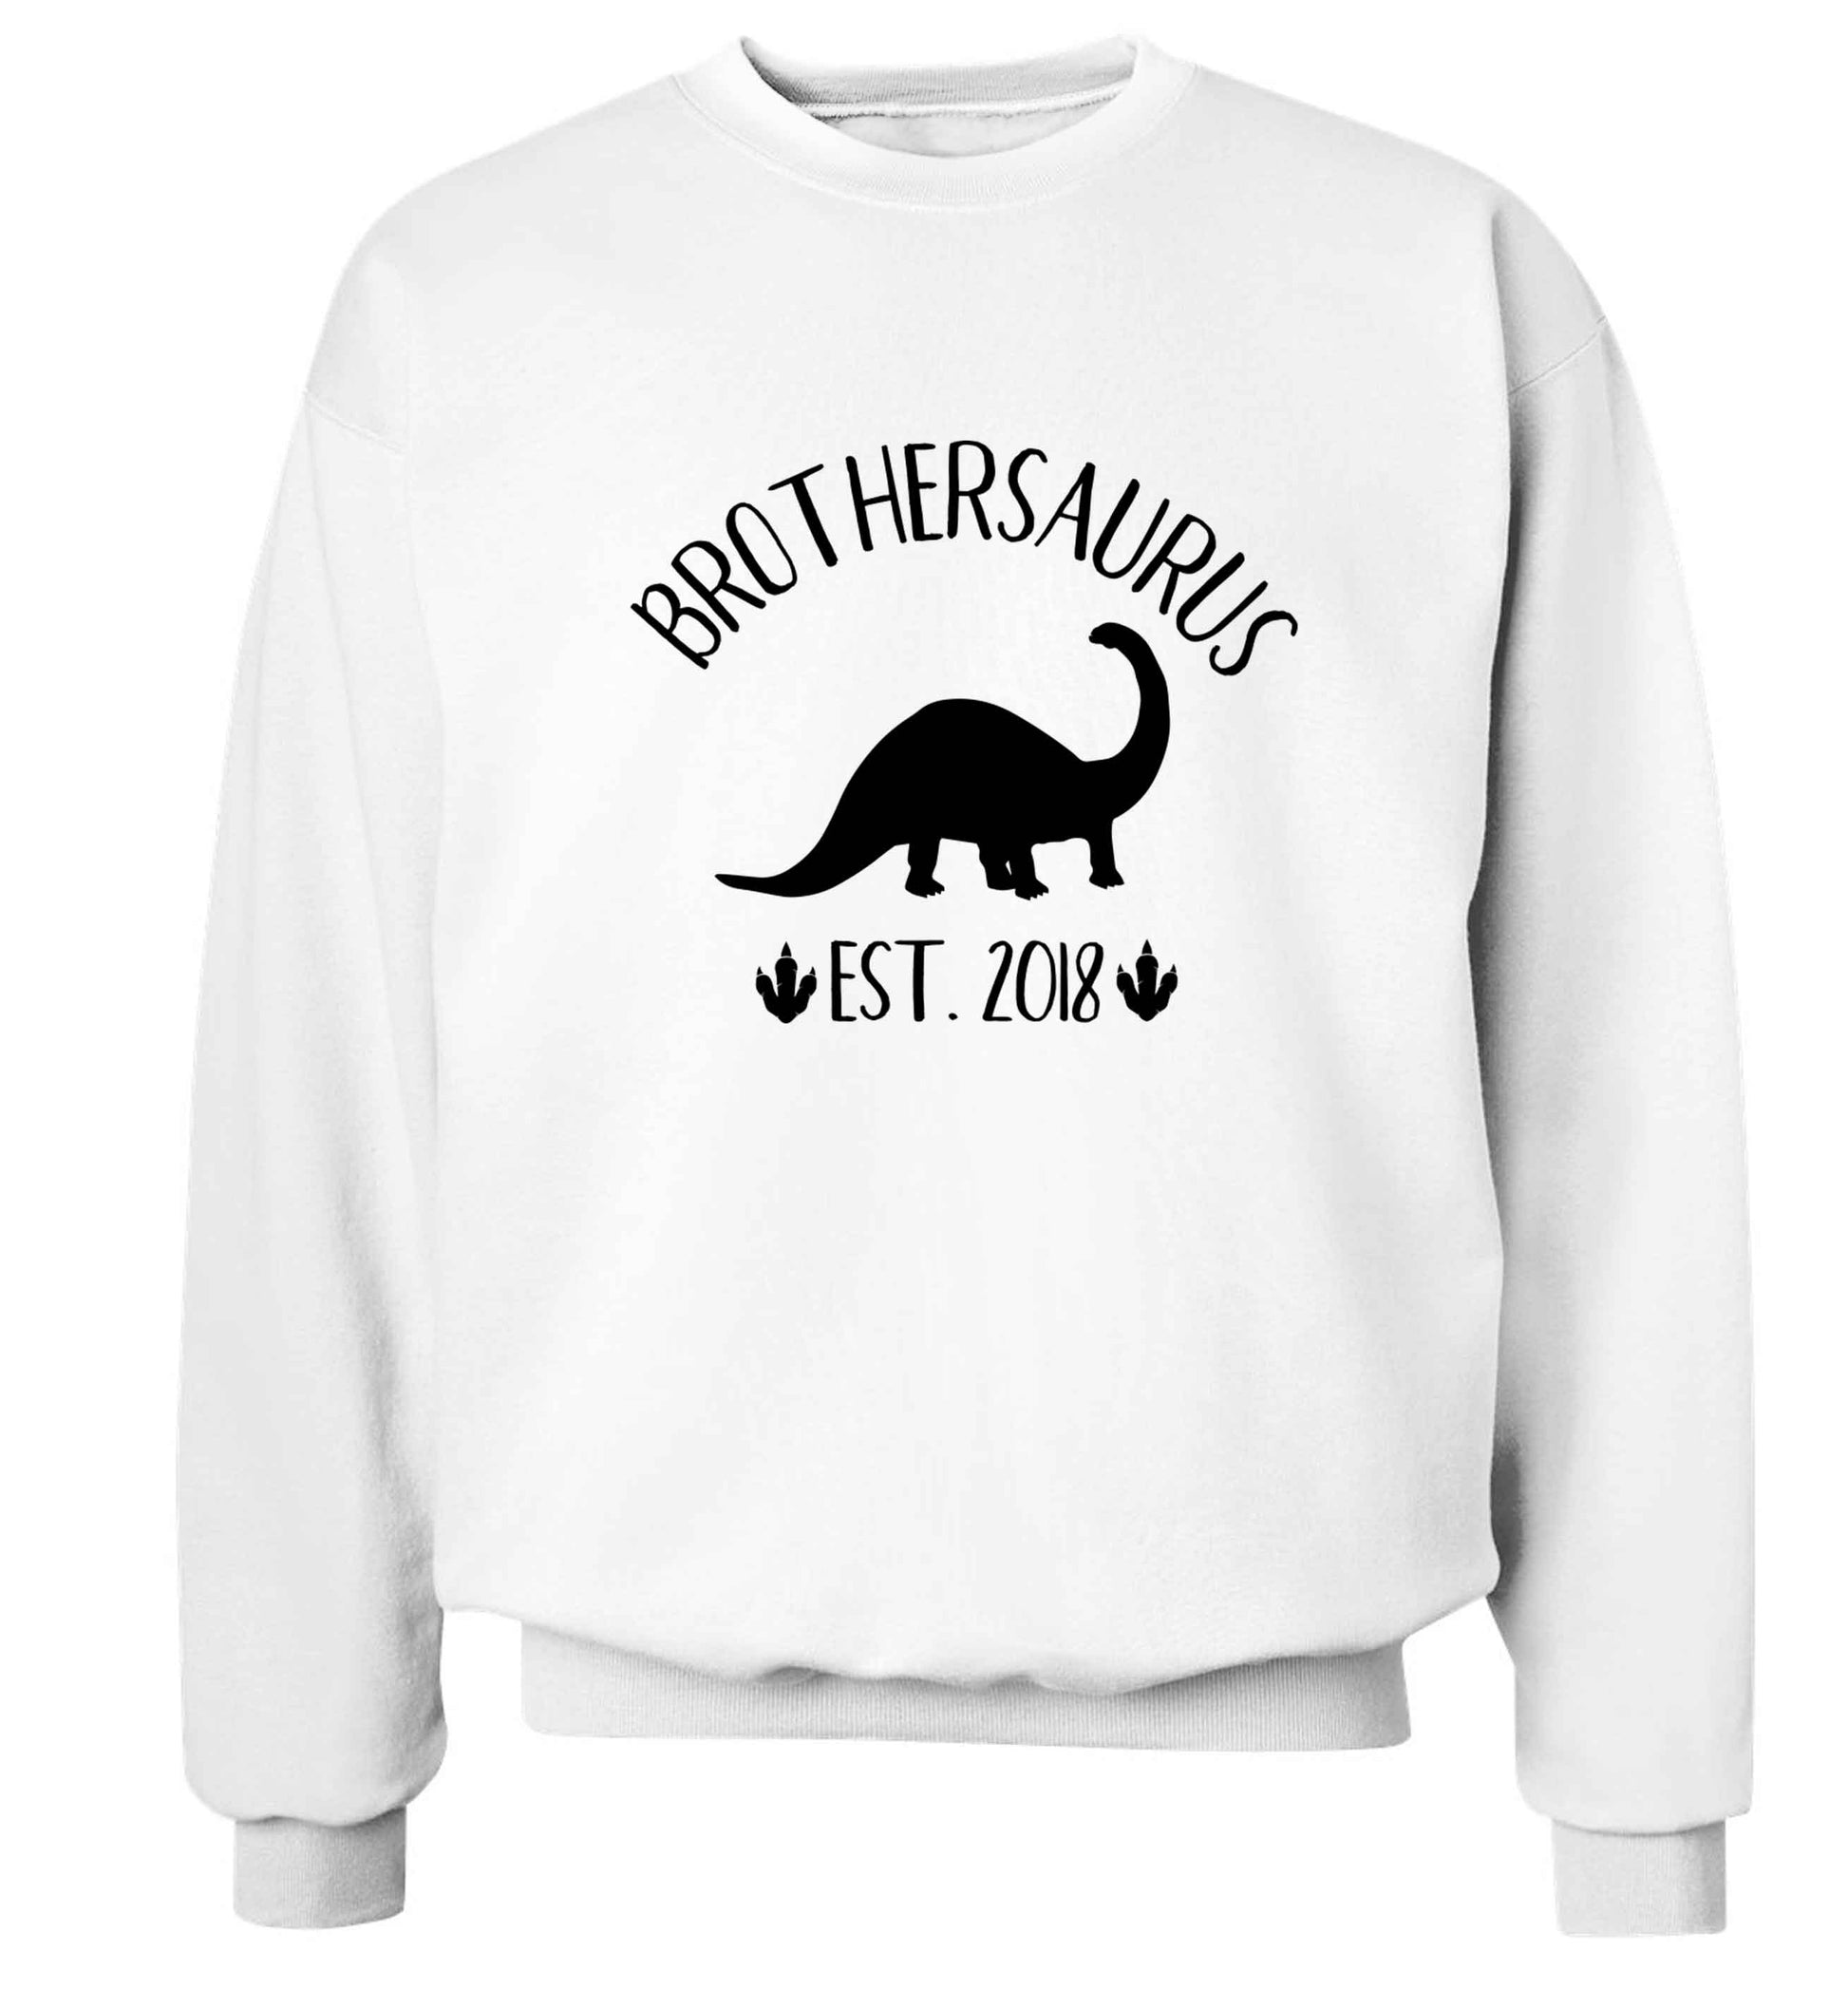 Personalised brothersaurus since (custom date) Adult's unisex white Sweater 2XL